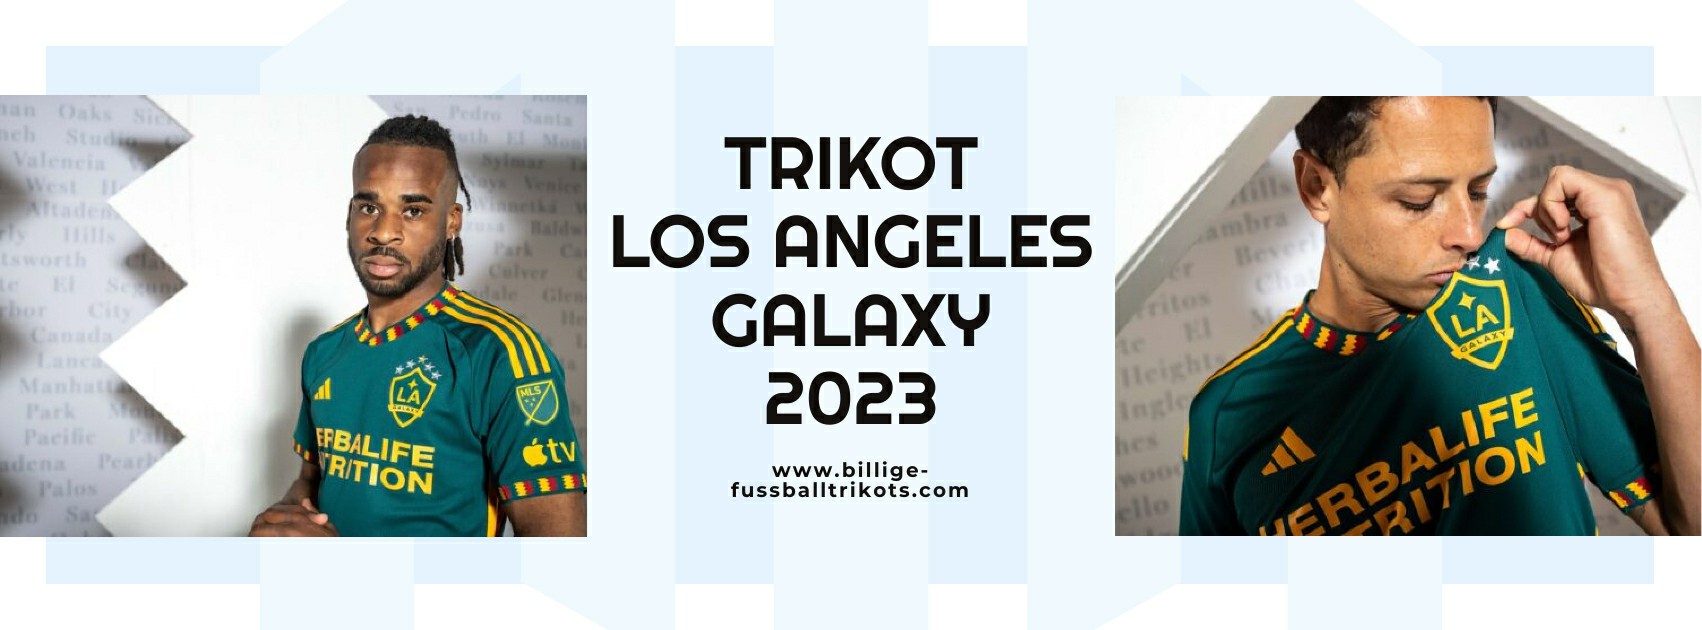 Los Angeles Galaxy Trikot 2023-2024